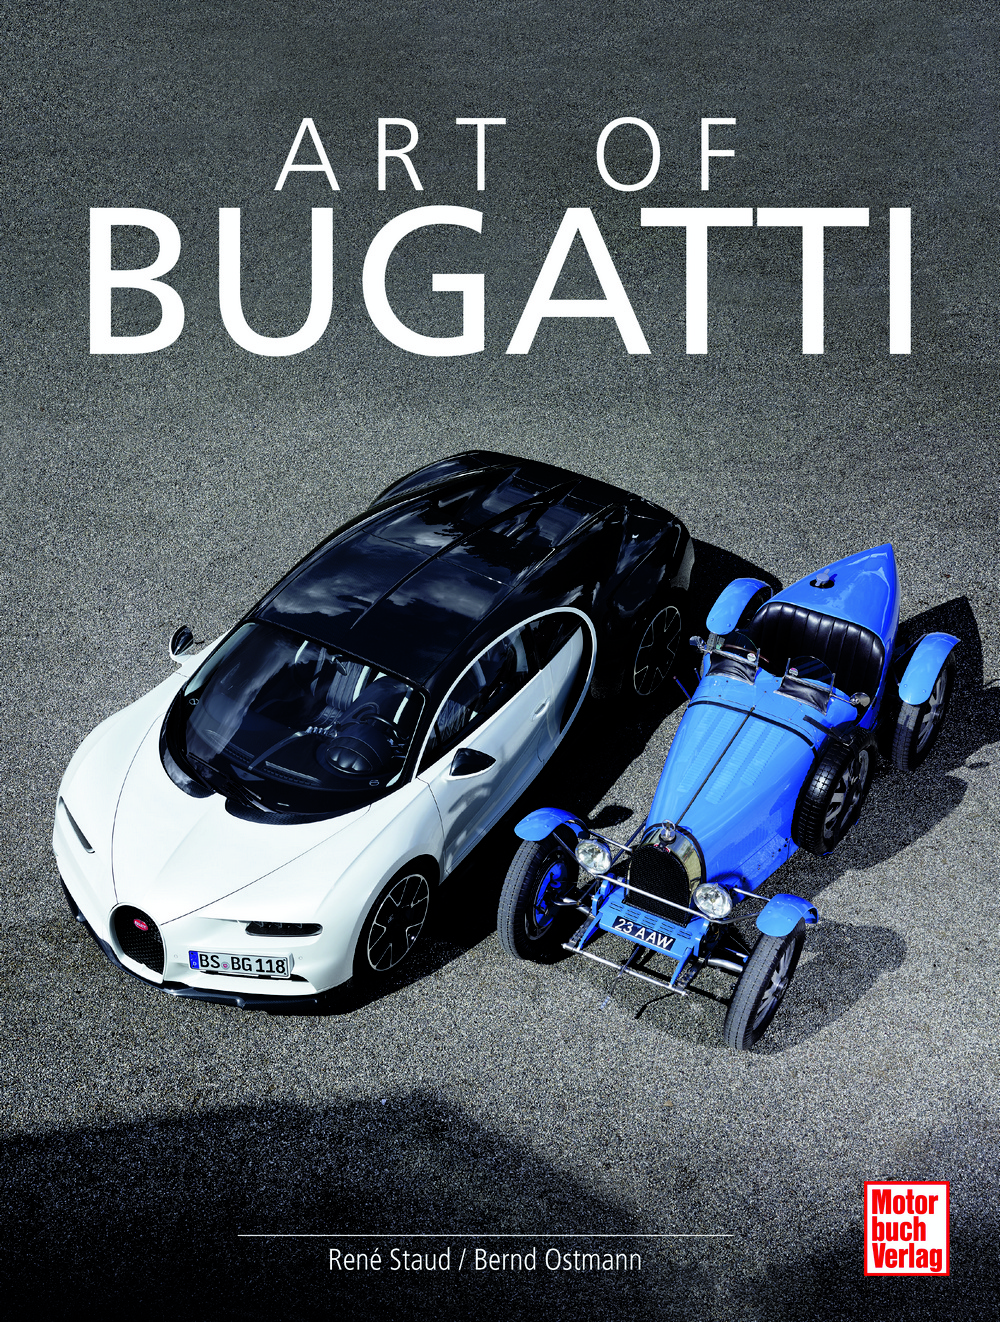 foto cover art of bugatti buch motorbuch verlag